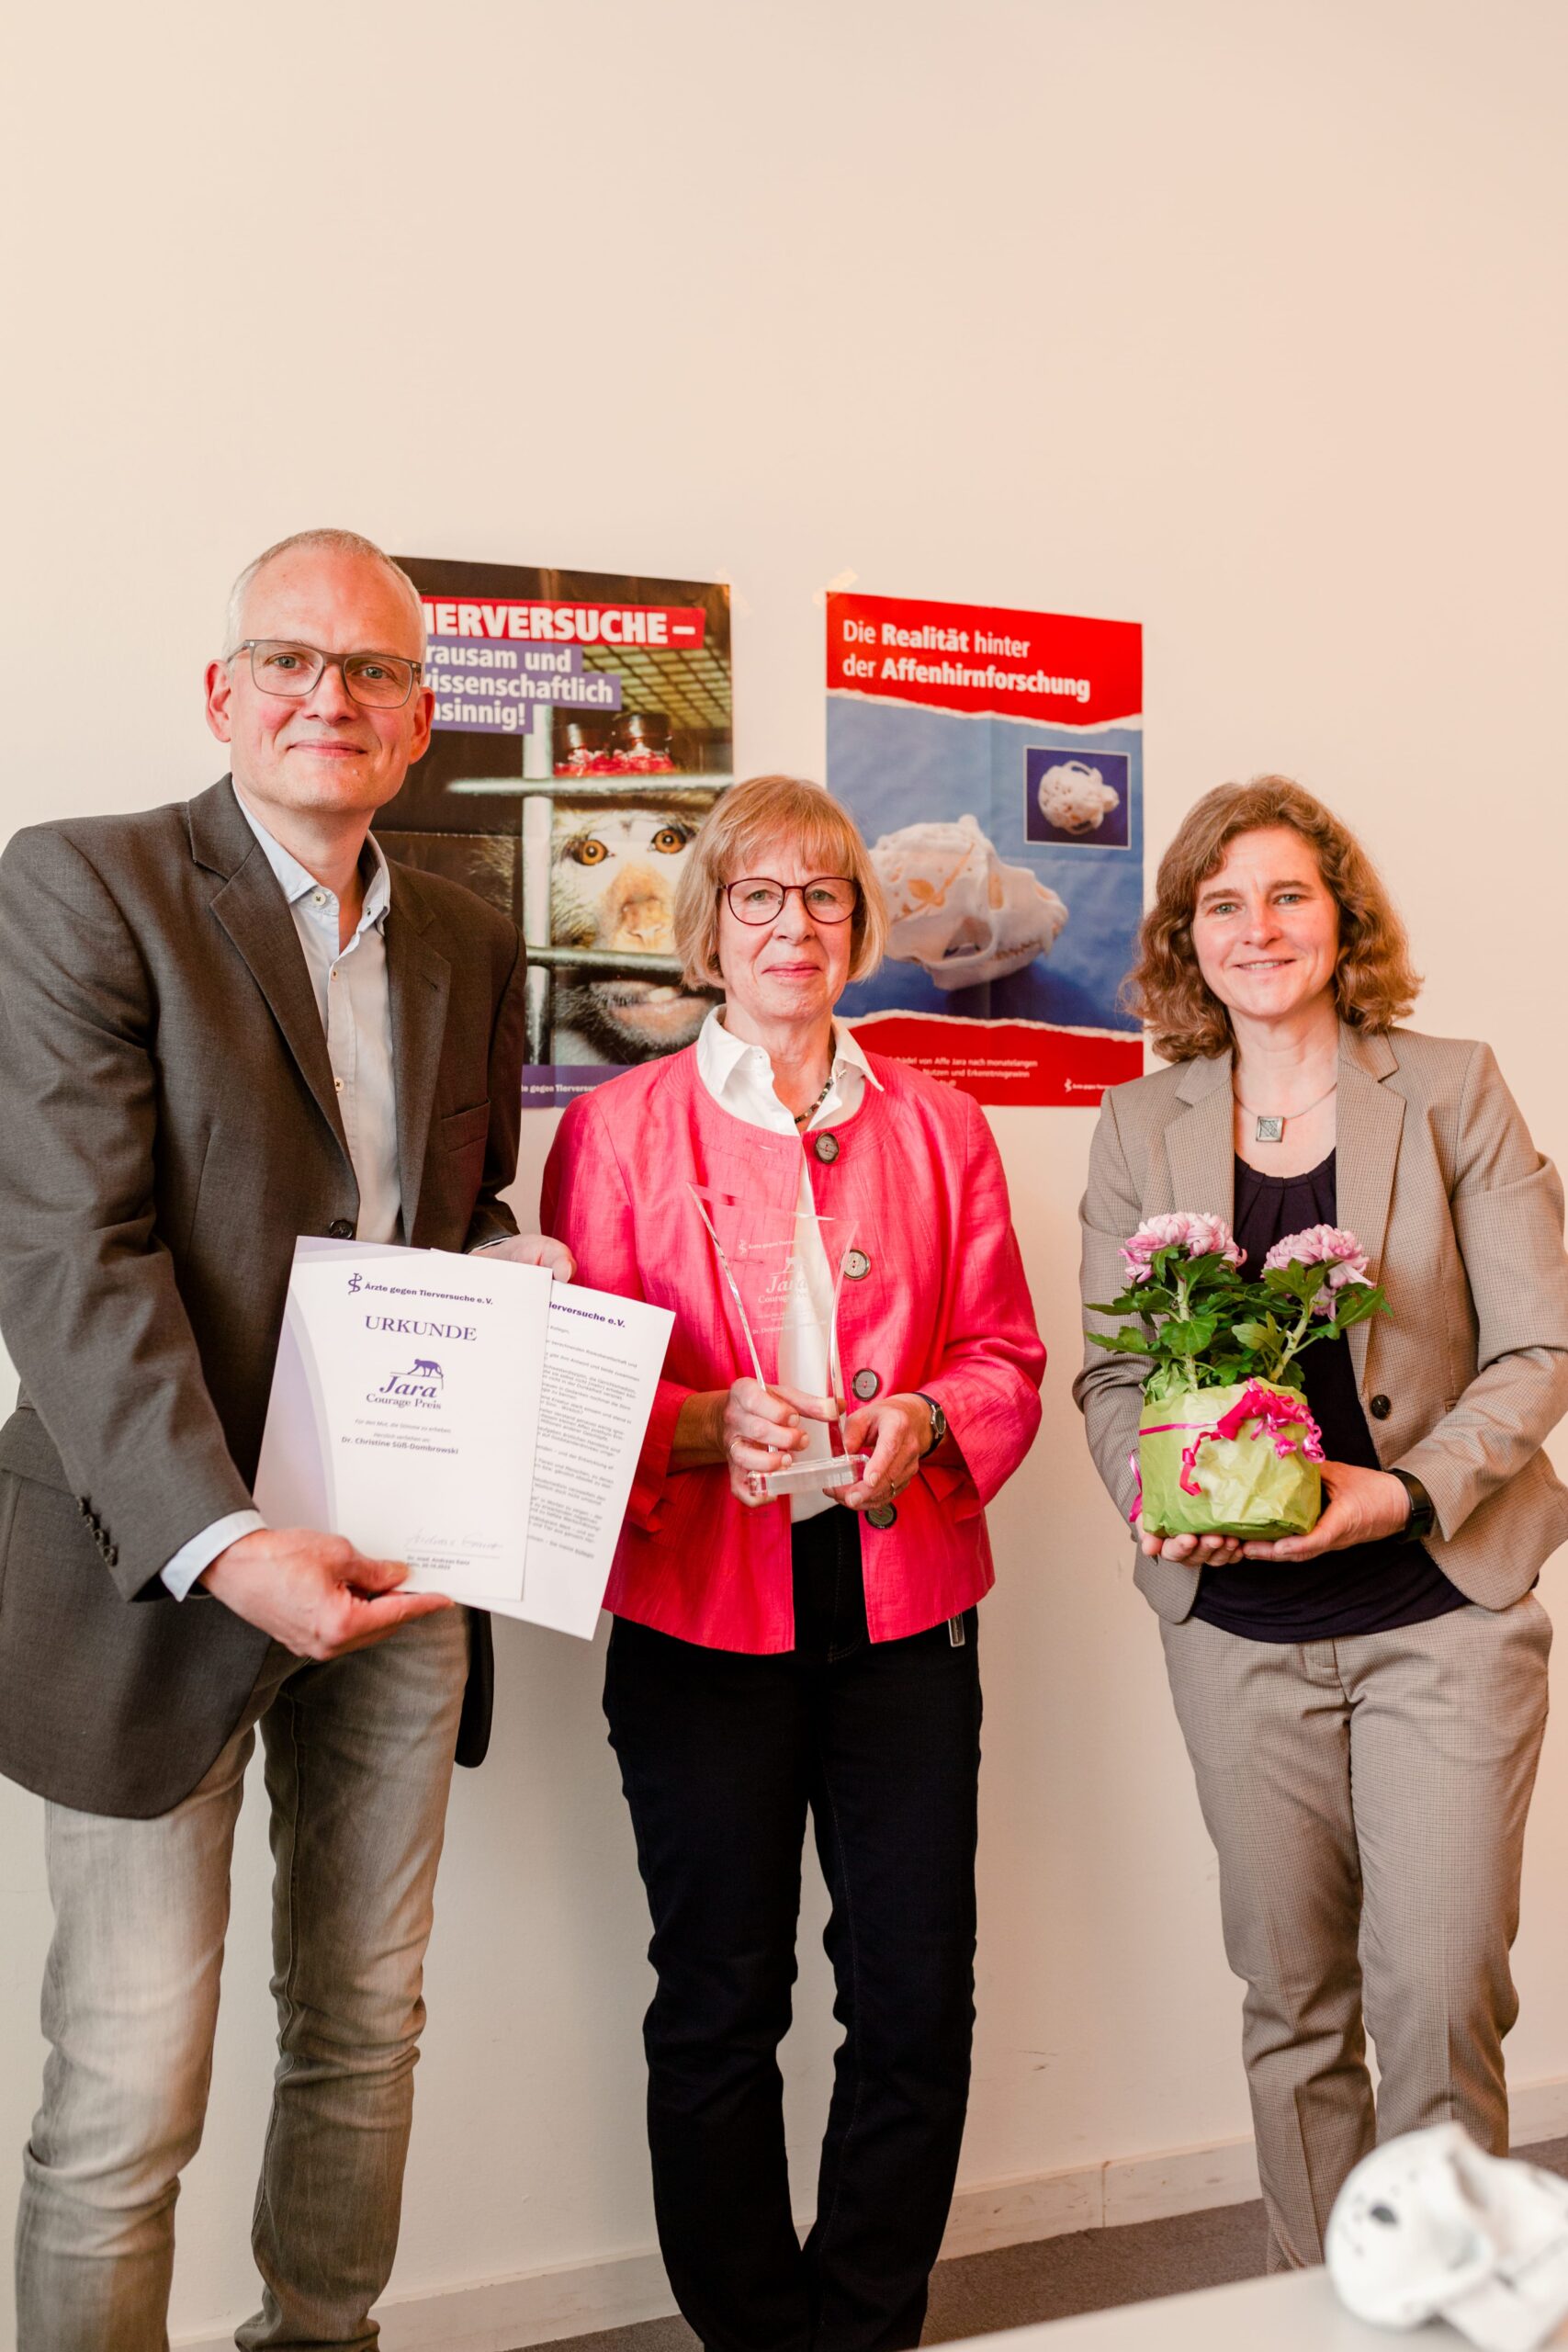 Jara Courage Preis wurde an Frau Dr. Christine Süß-Dombrowski verliehen